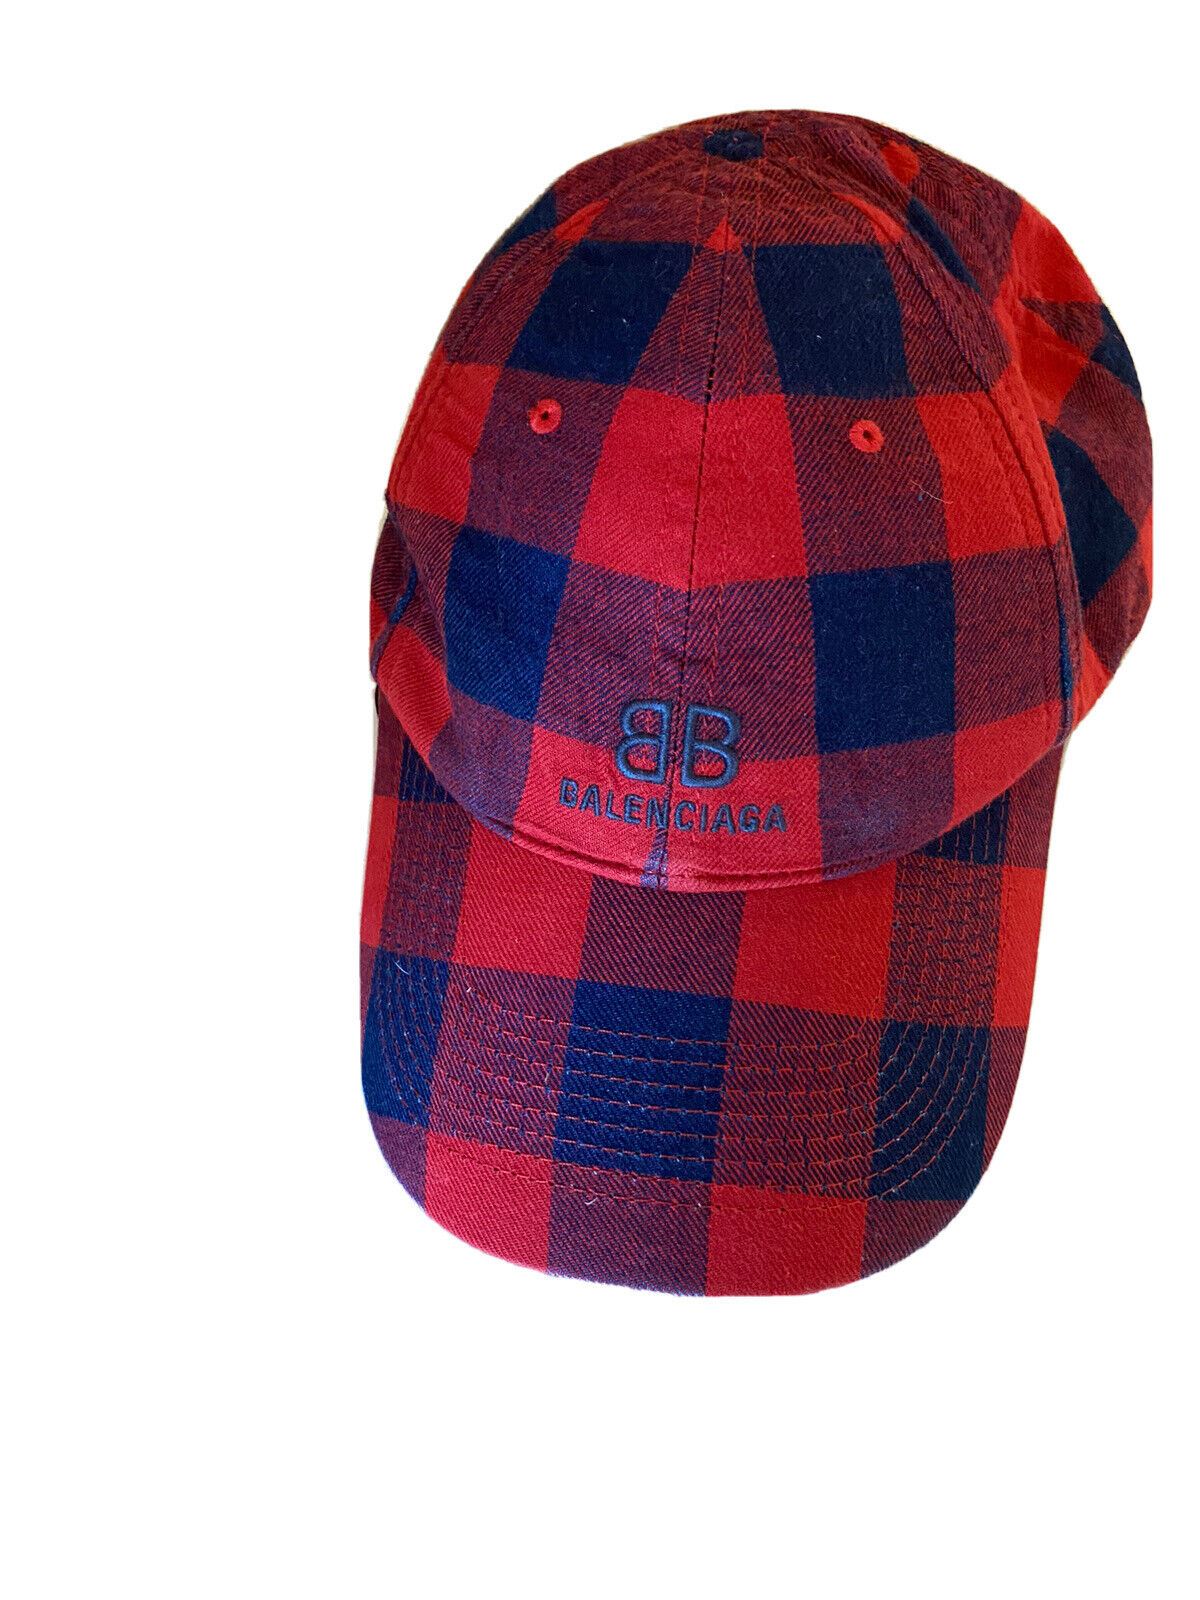 NWT Balenciaga Flannel Baseball Cap Hat Red/Blue Size L Italy